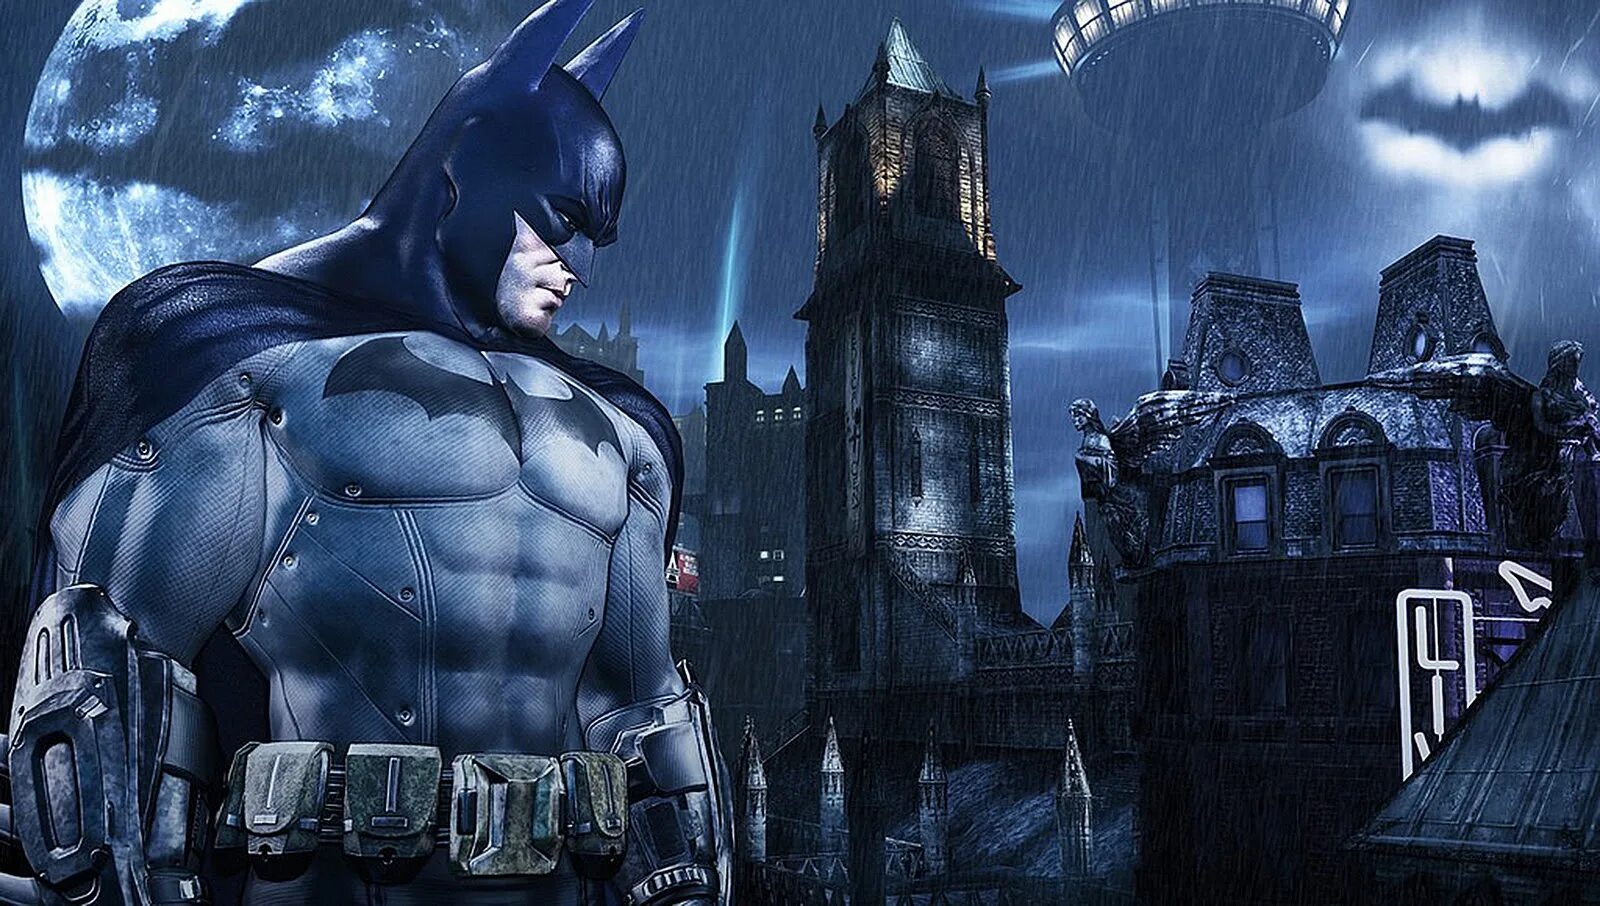 Бэтмен аркхам сити. Бэтмен Аркхем Сити. Batman Arkham City Бэтмен. Batman Arkham City GOTY. Бэтмен Акрам Сити.